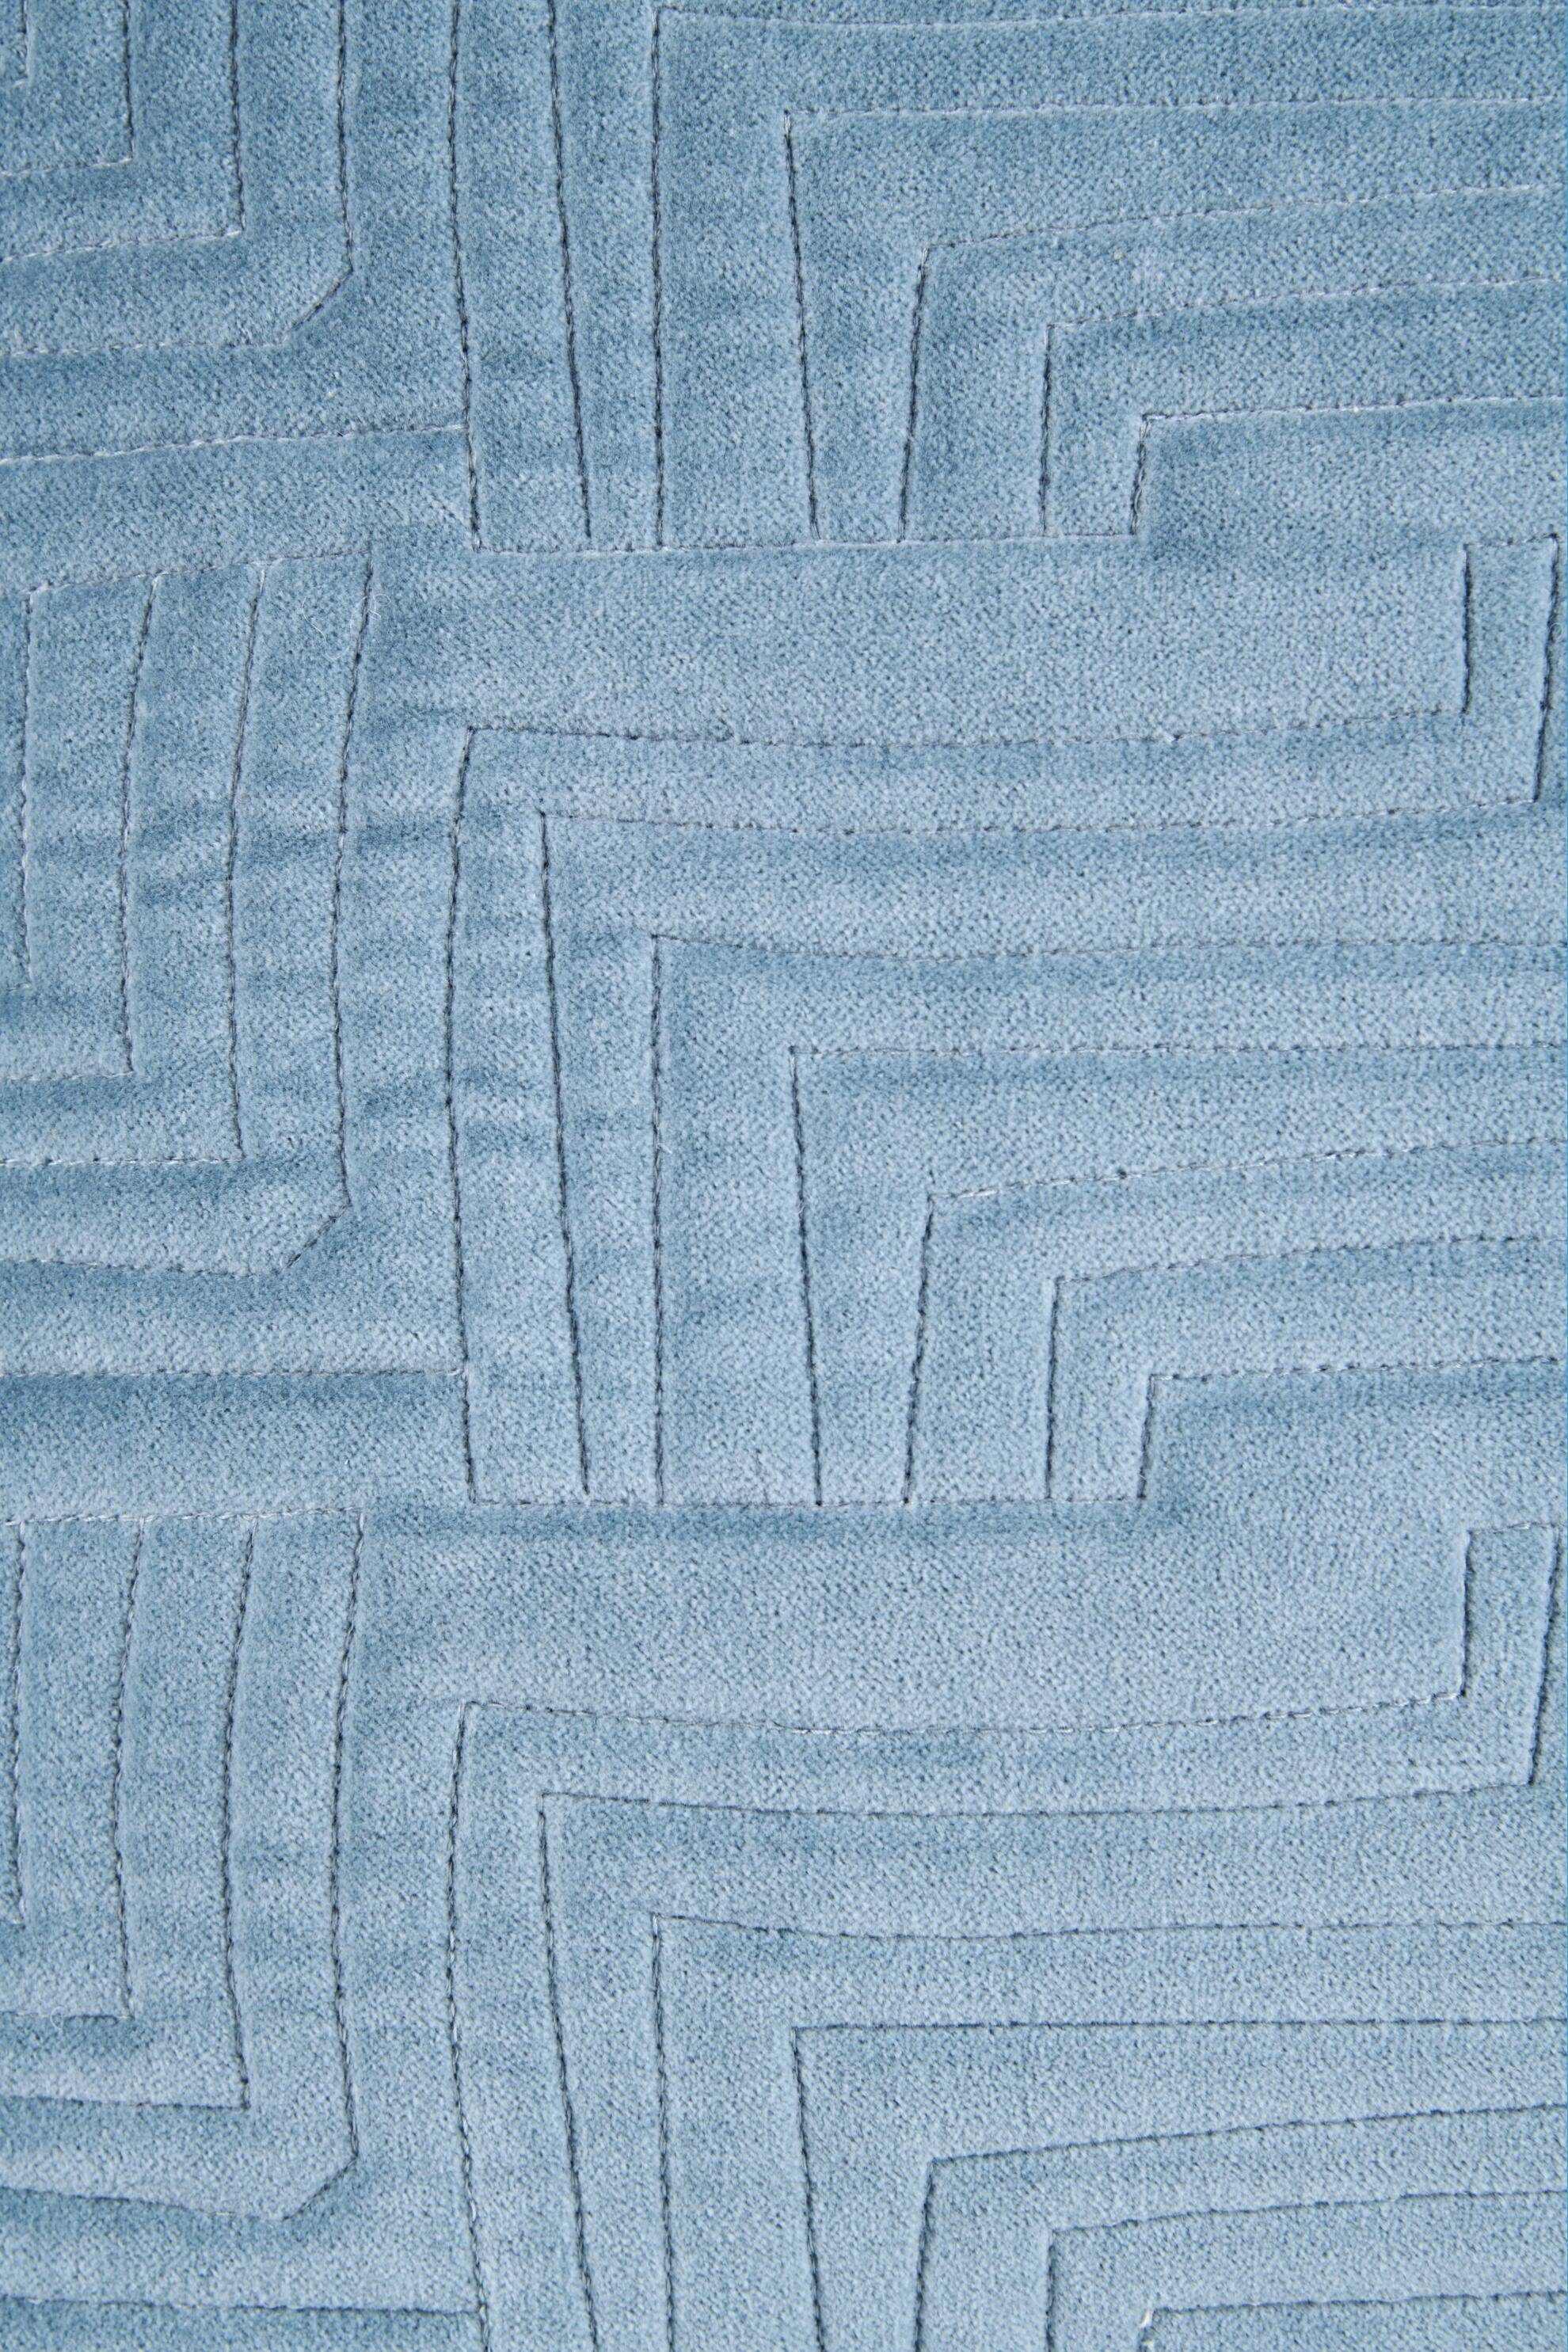 inkl. Ice gestepptes Samtkissen Hellblau carla&marge mit cm, Linien, 45x45 Dekokissen Füllung Dorliana, Blue in